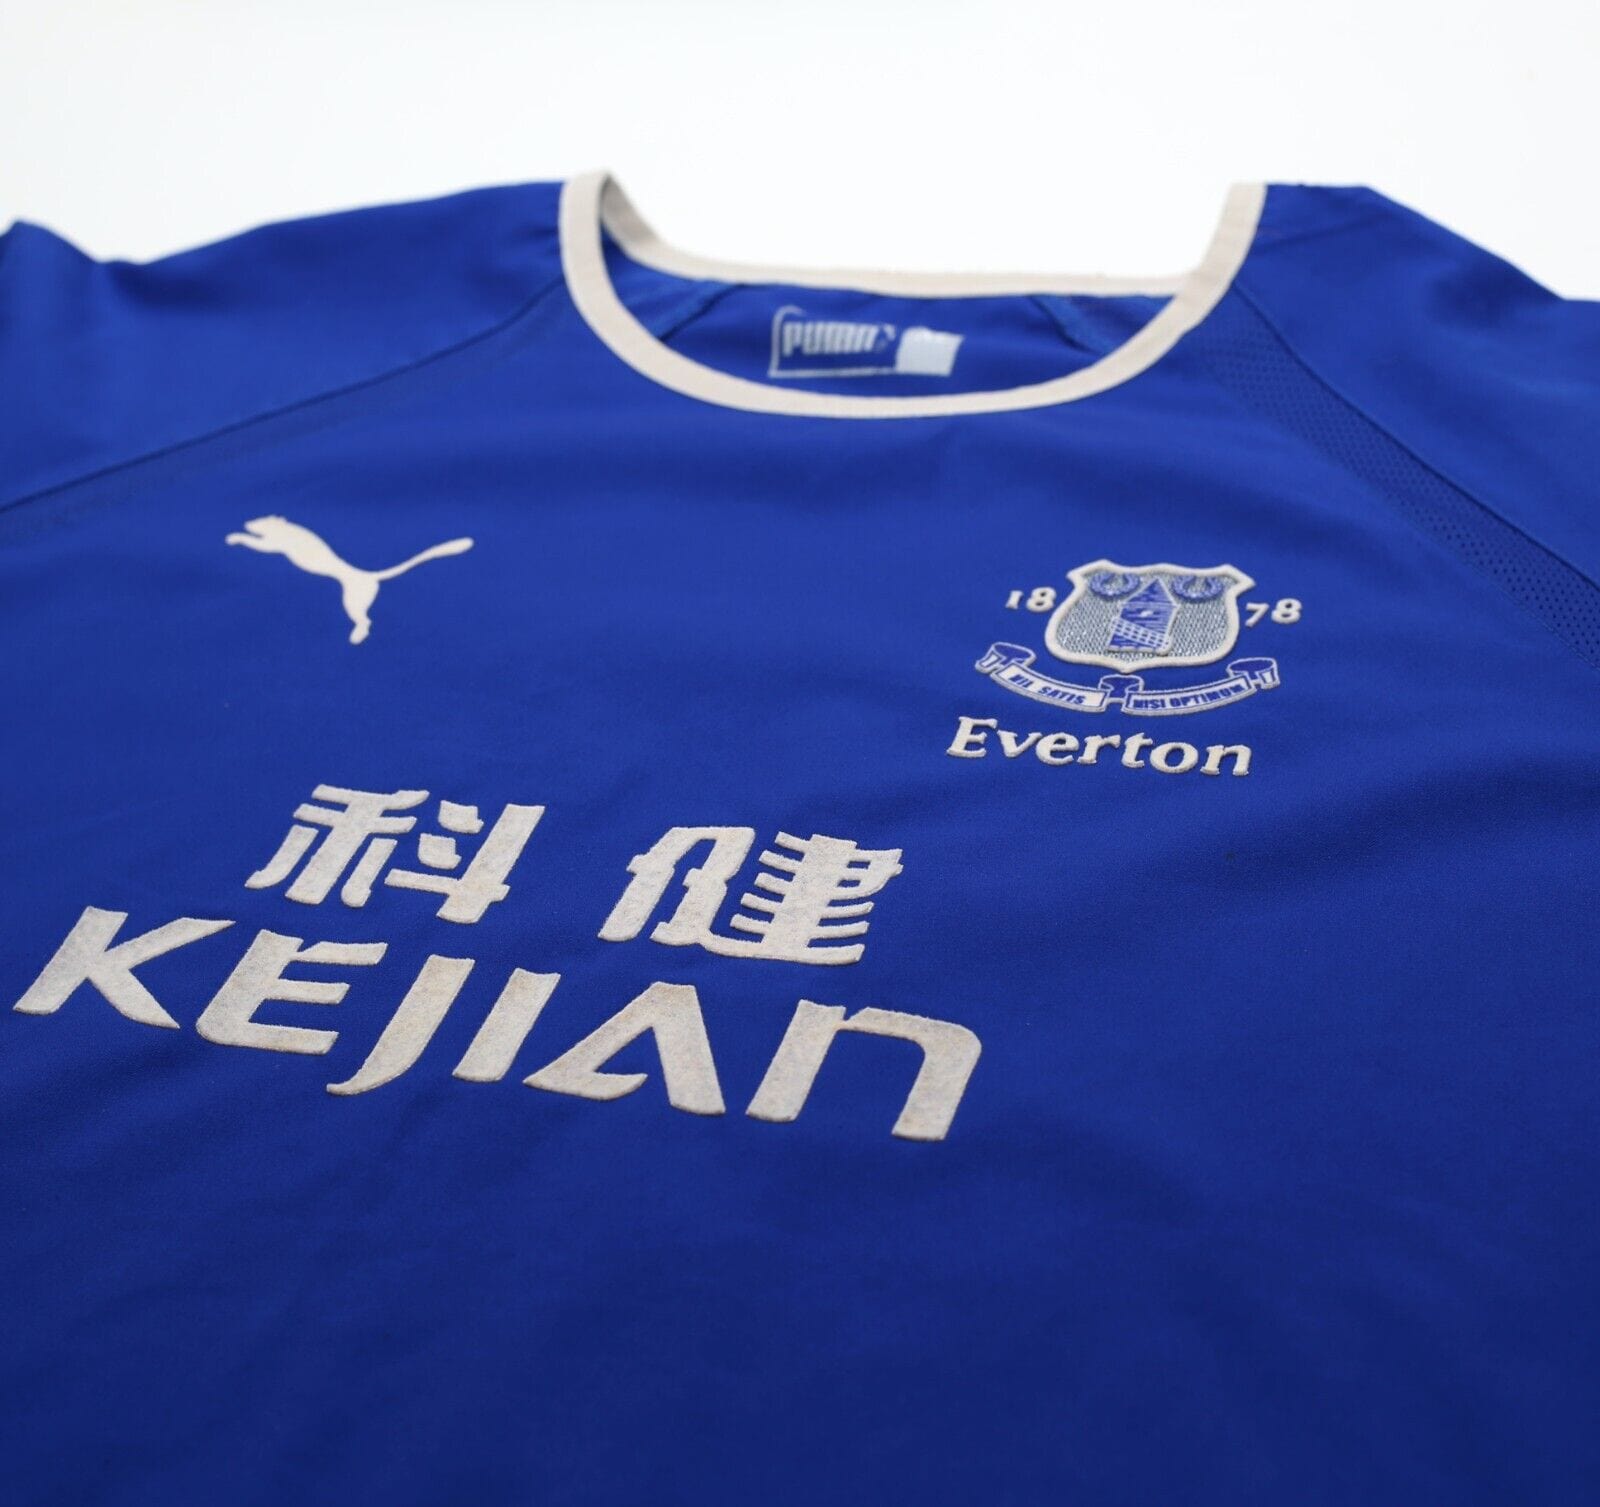 2003/04 ROONEY #18 Everton Vintage PUMA Home Football Shirt (XL)